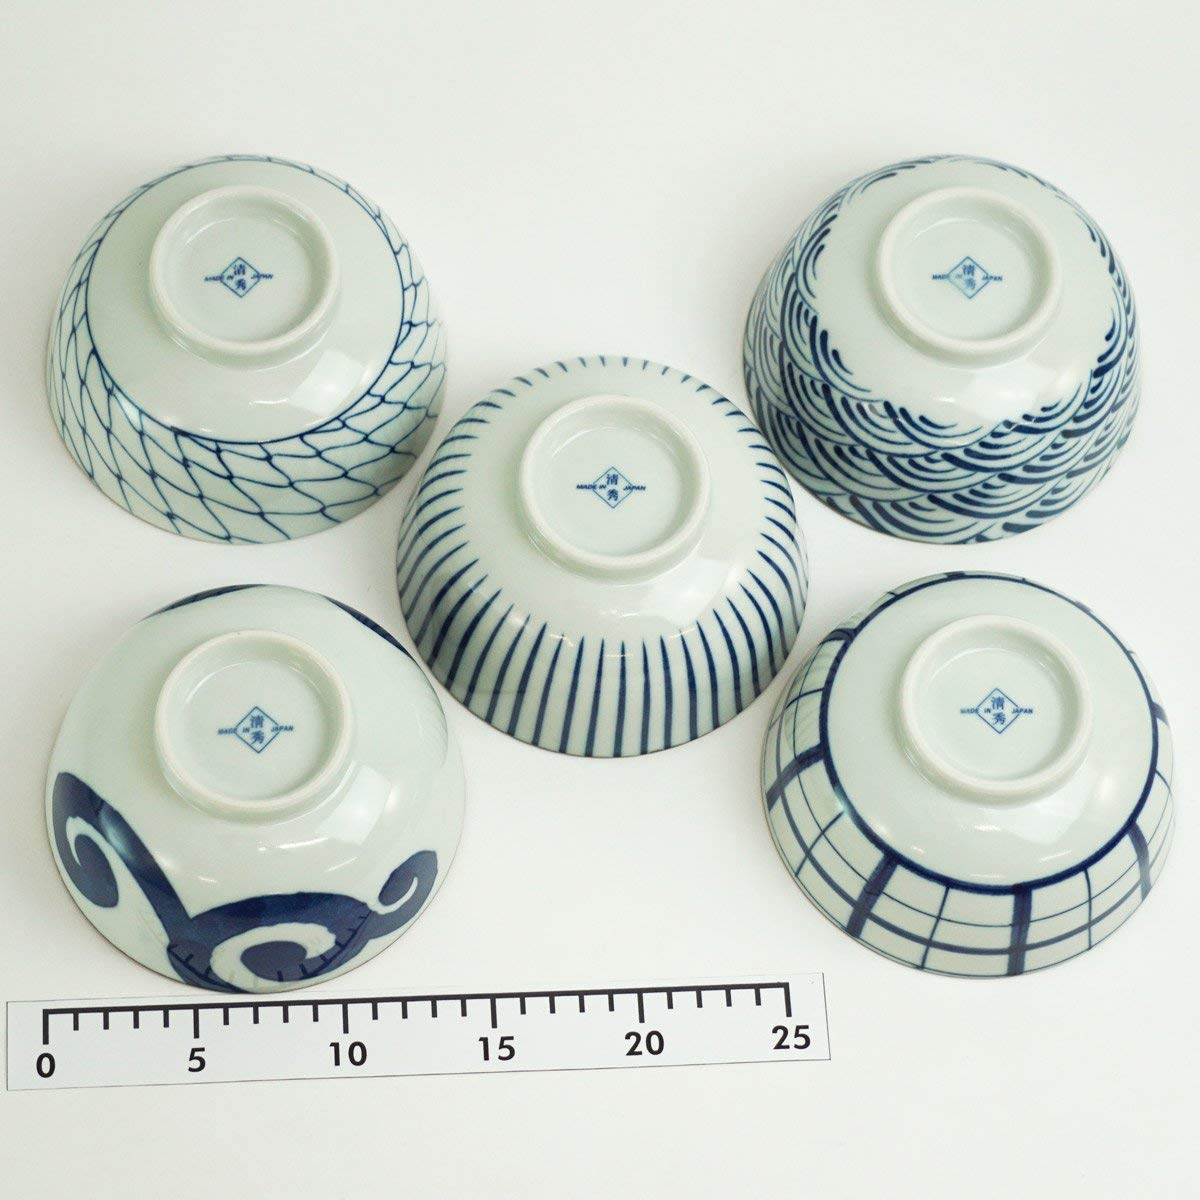 Saikai Pottery Traiditional Japanese Blue And White patterns Japanease Rice Bowls (5 bowls set) 31043 from Japan